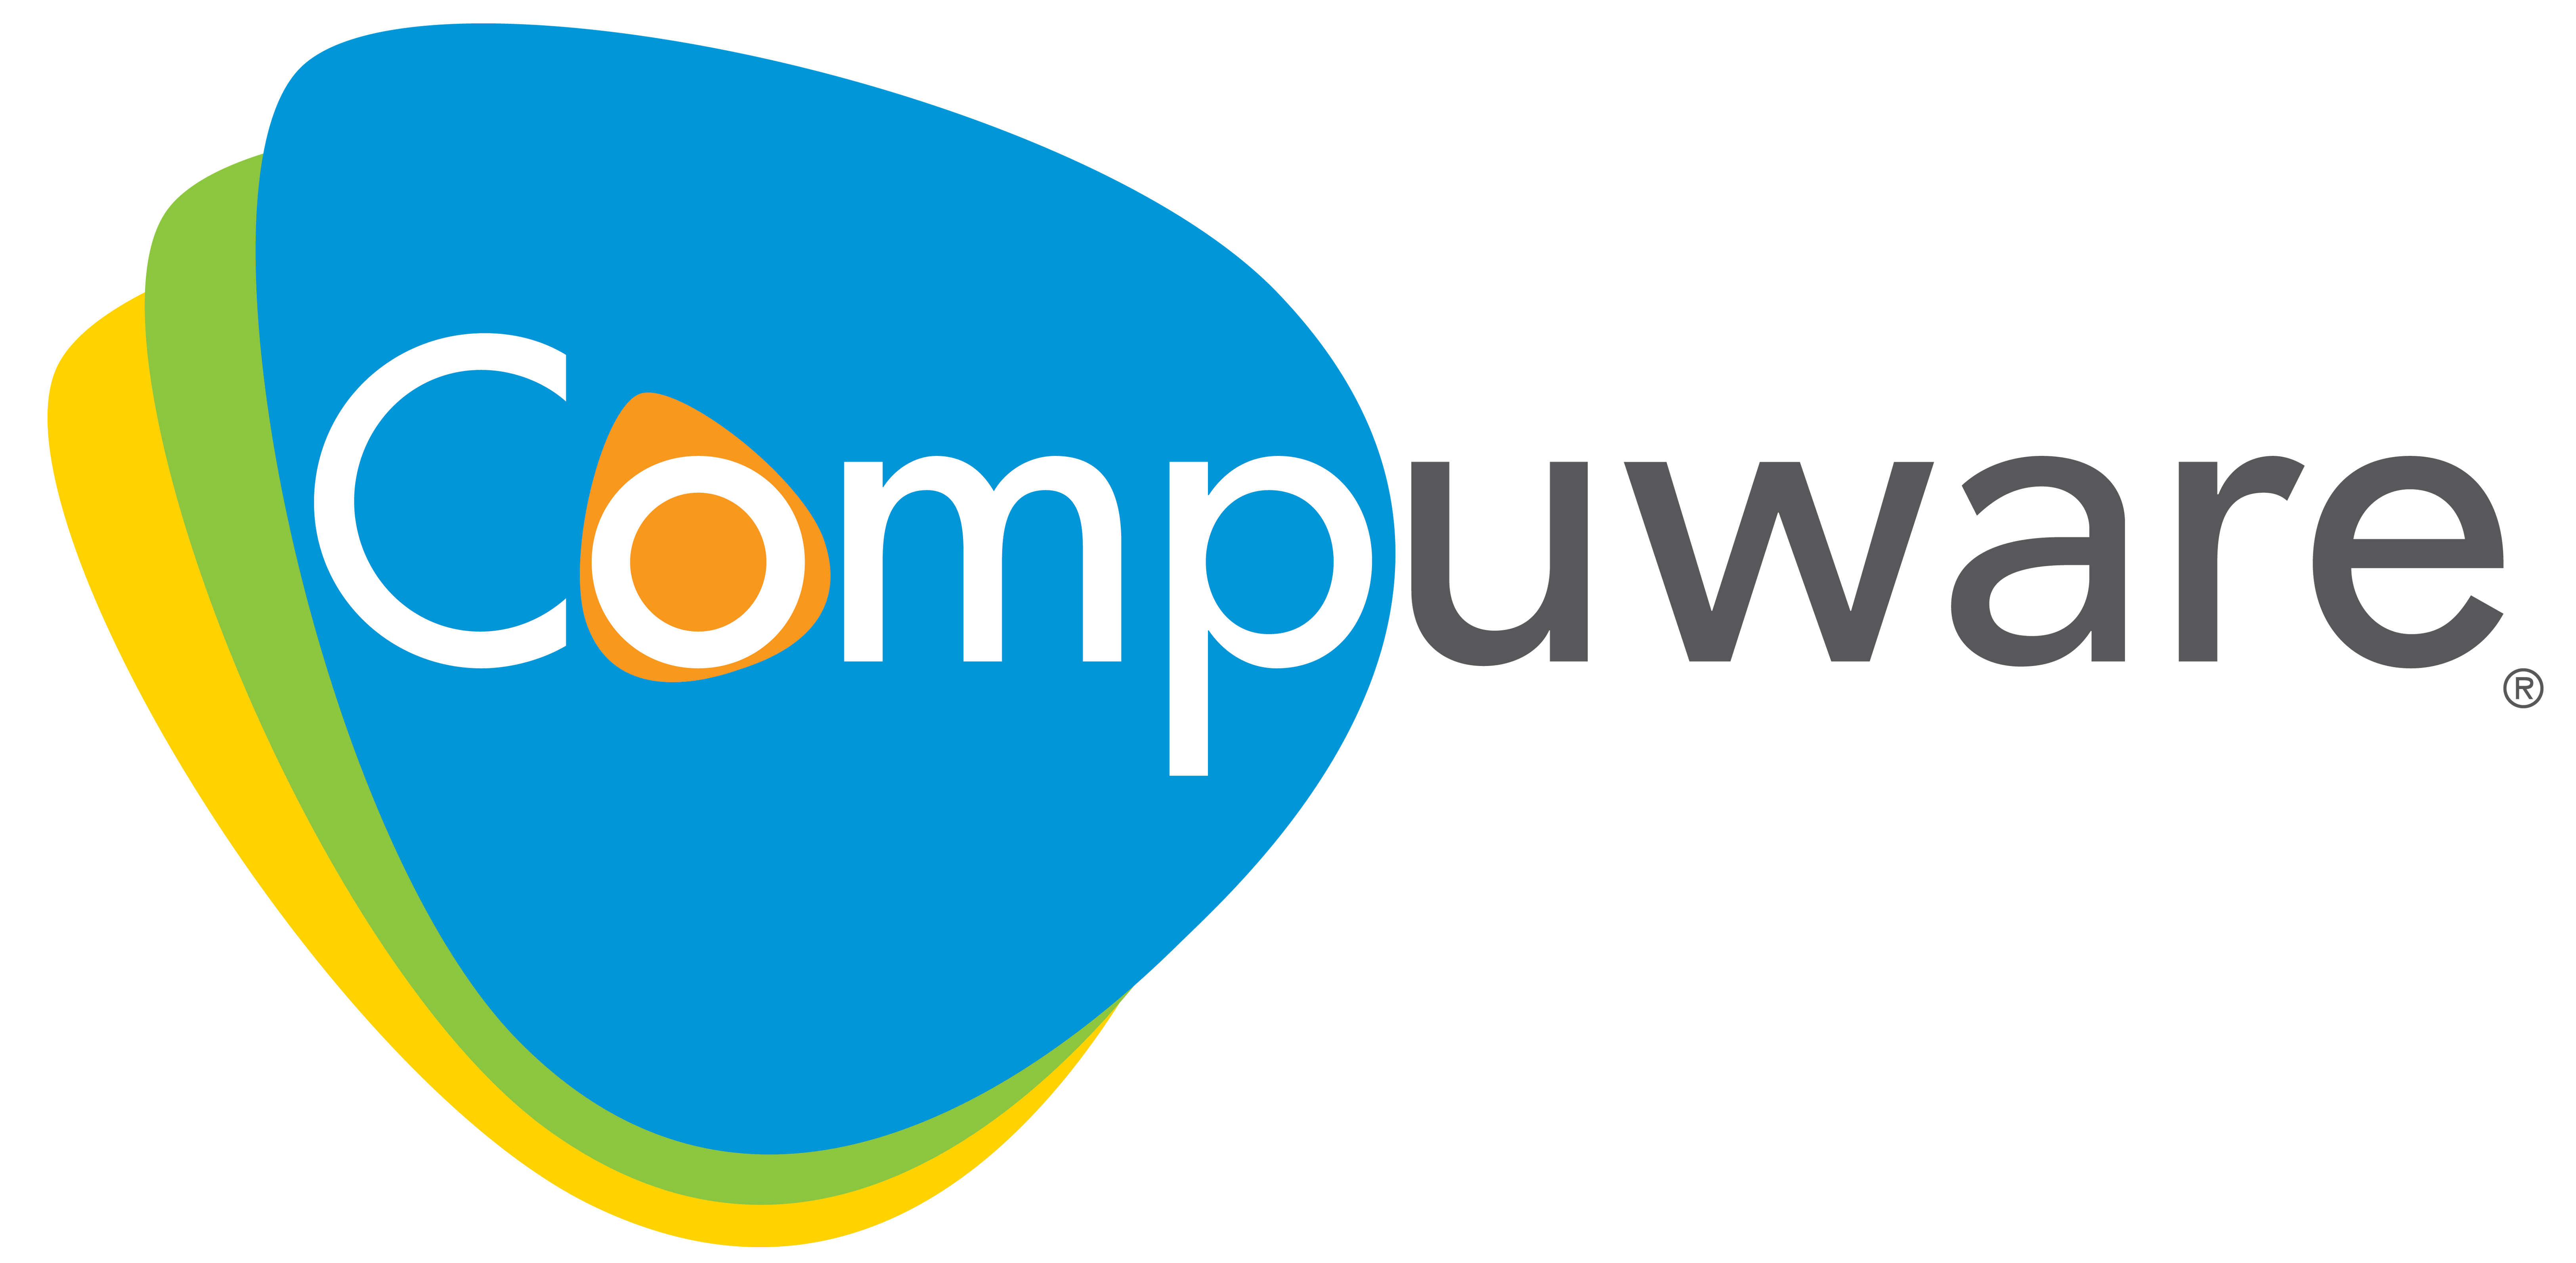 compuware 2019 logo